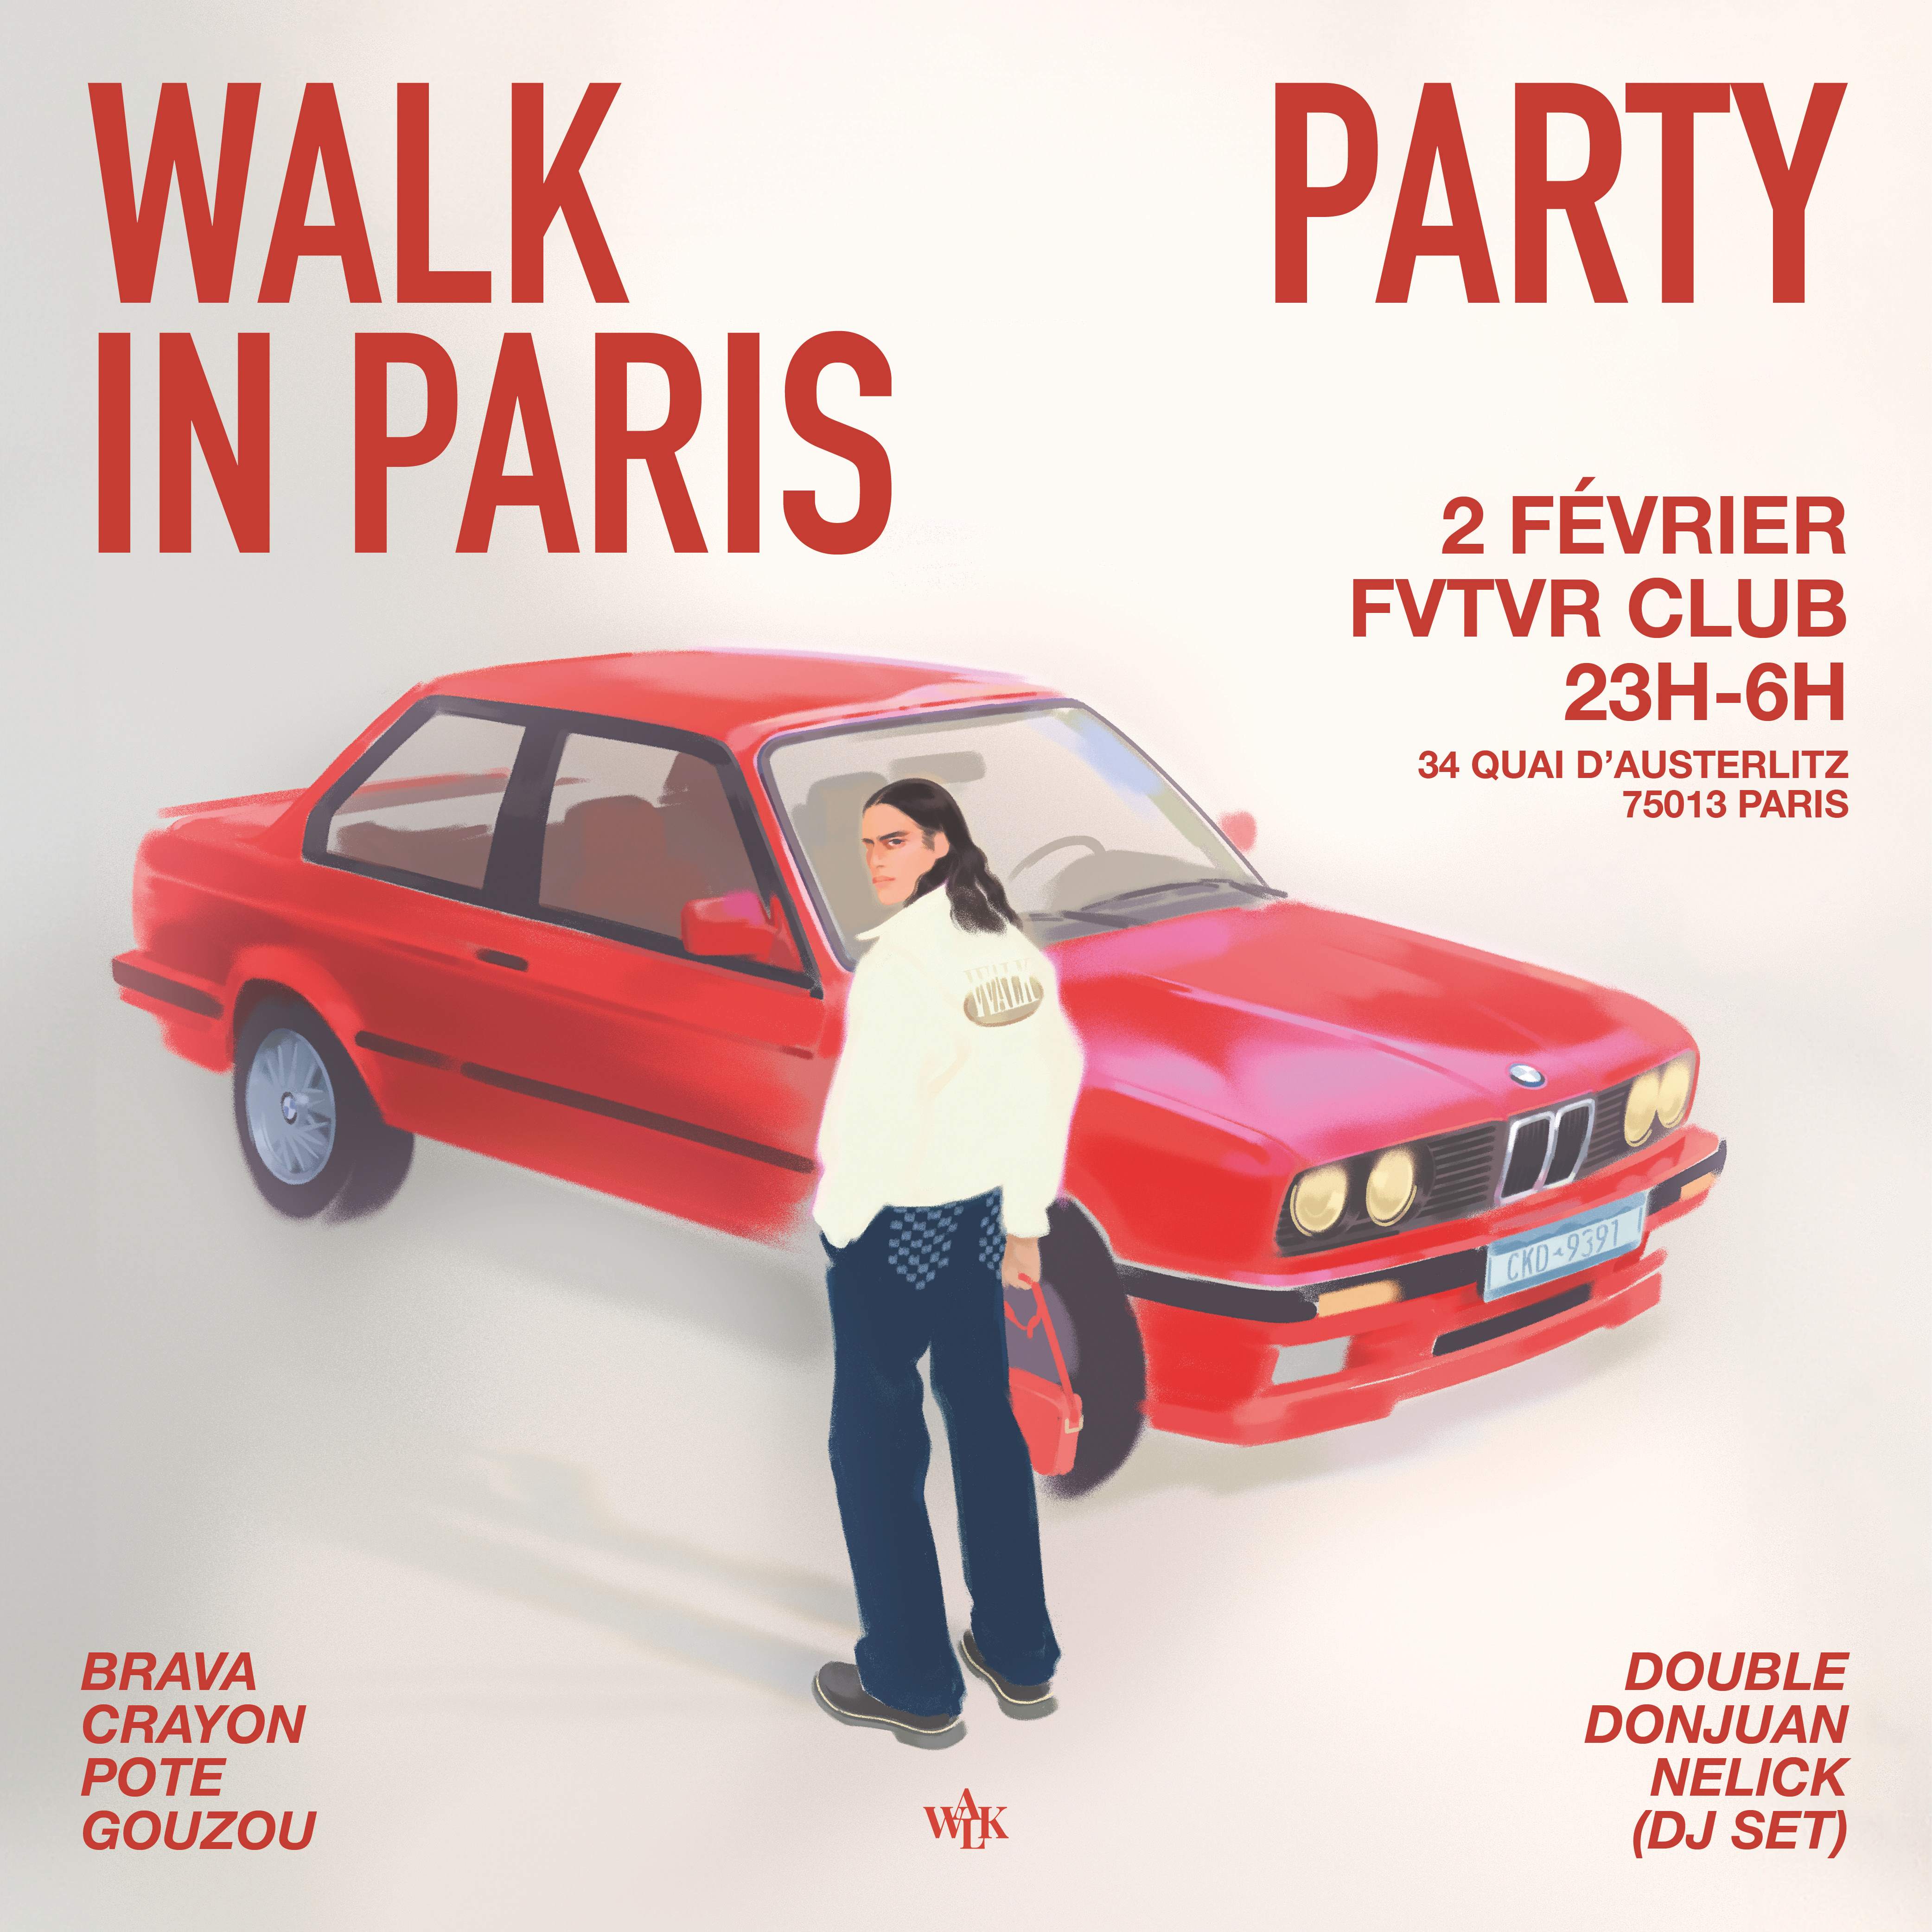 WALK IN PARIS PARTY - フライヤー表